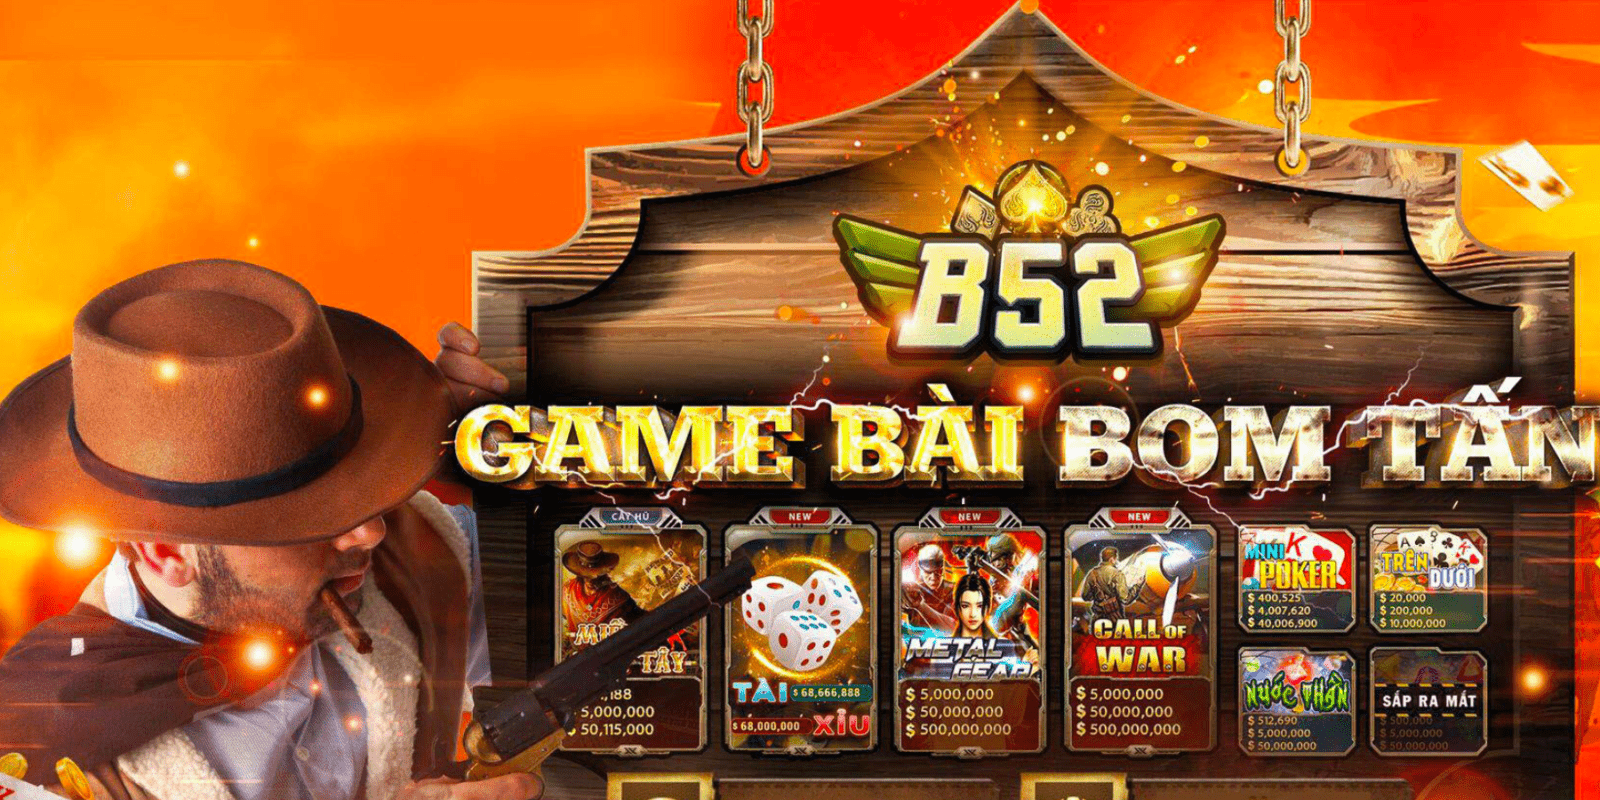 B52 Win  - Bom tấn game bài